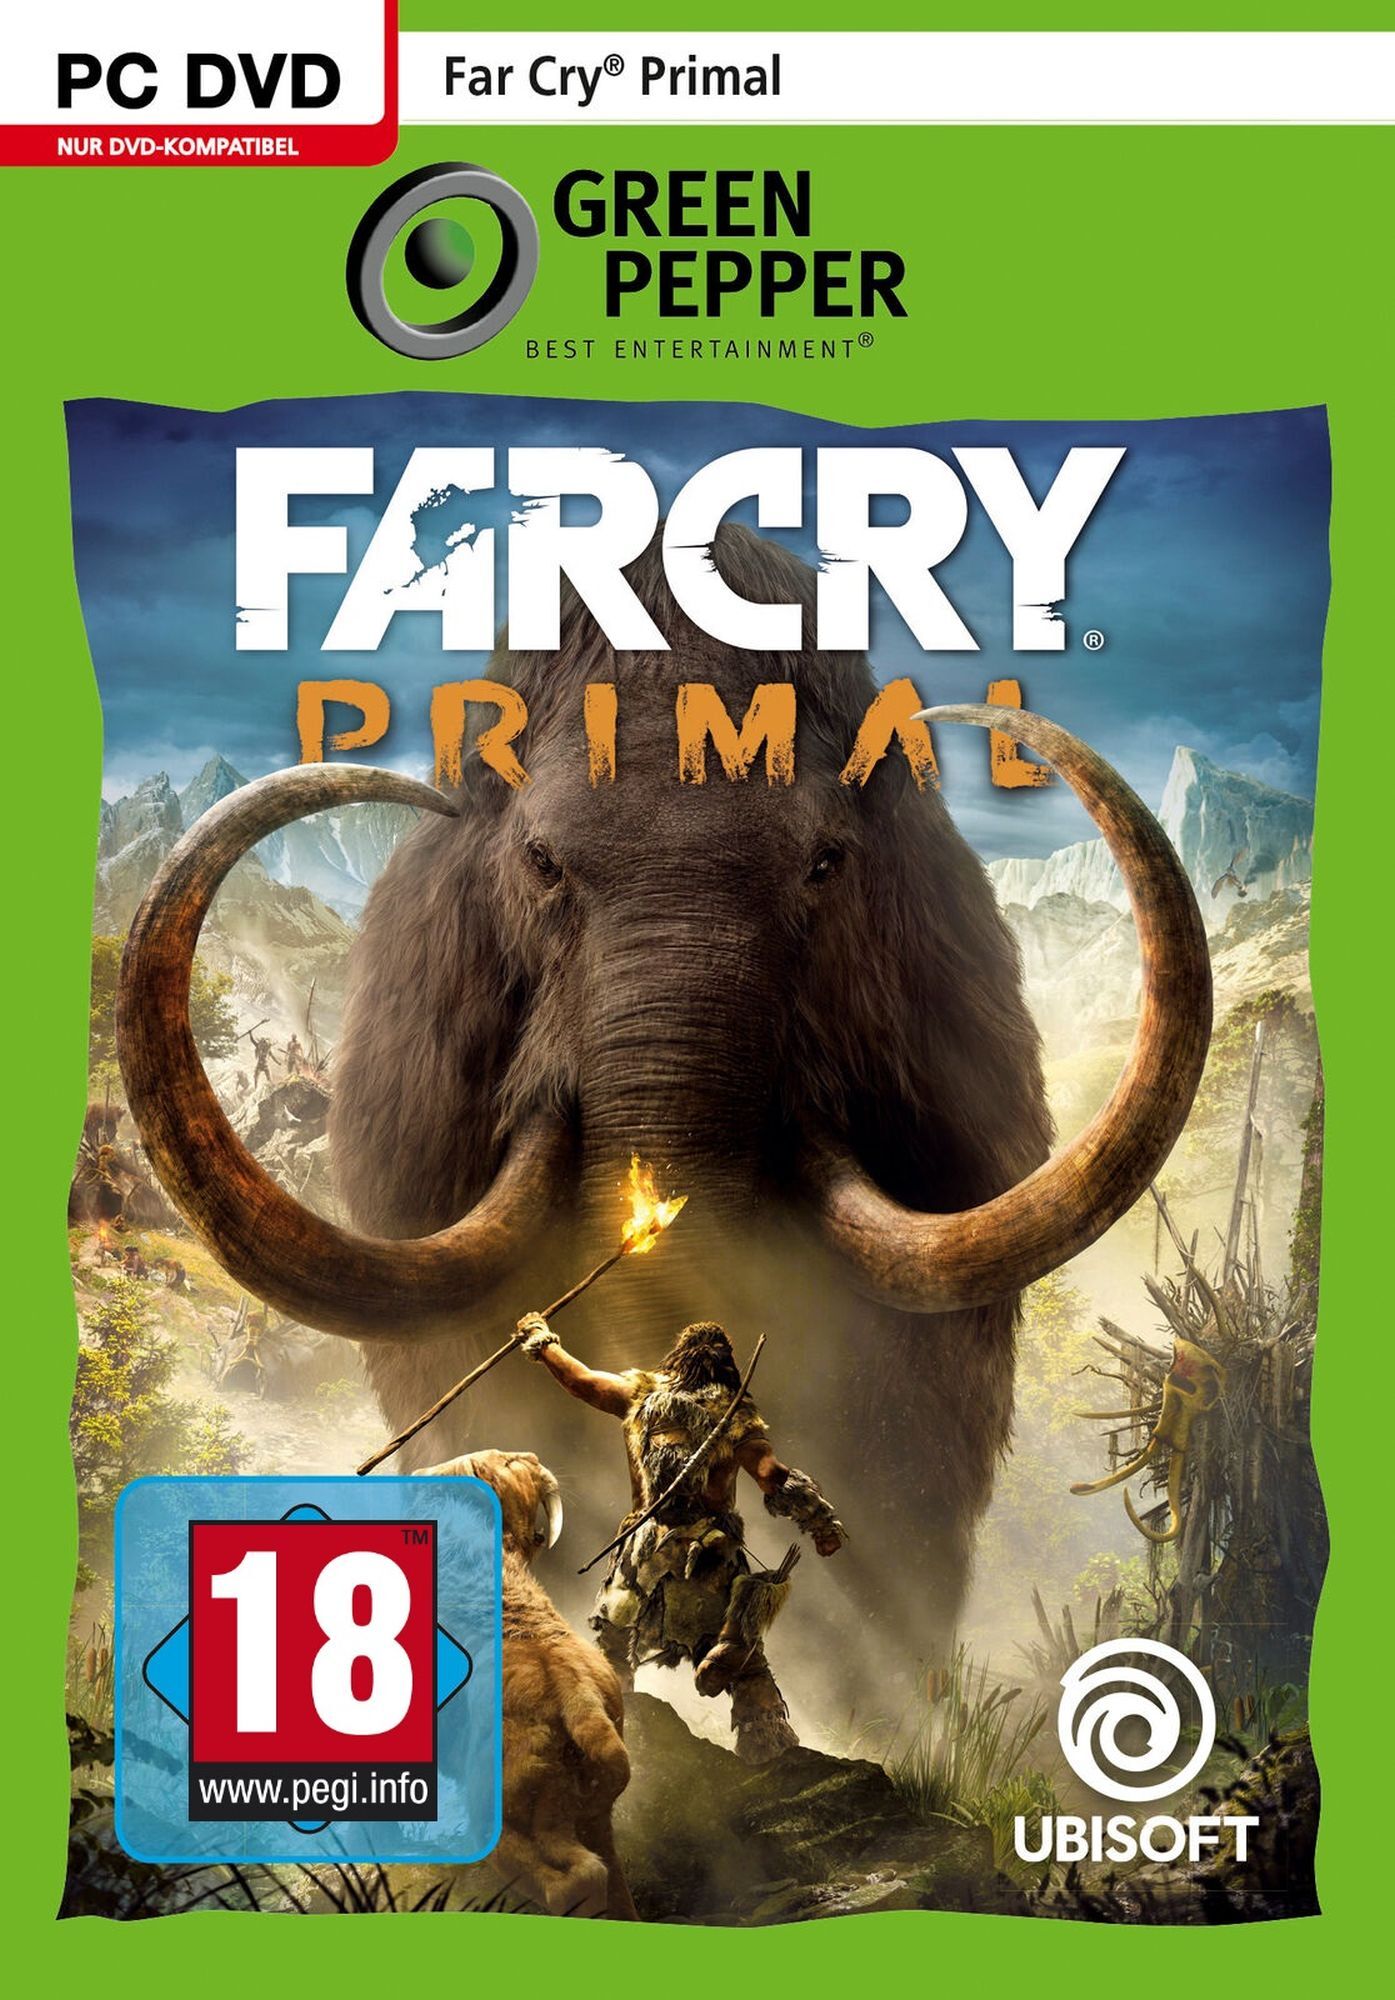 Ubisoft - Green Pepper: Far Cry Primal [DVD] [PC] (D)